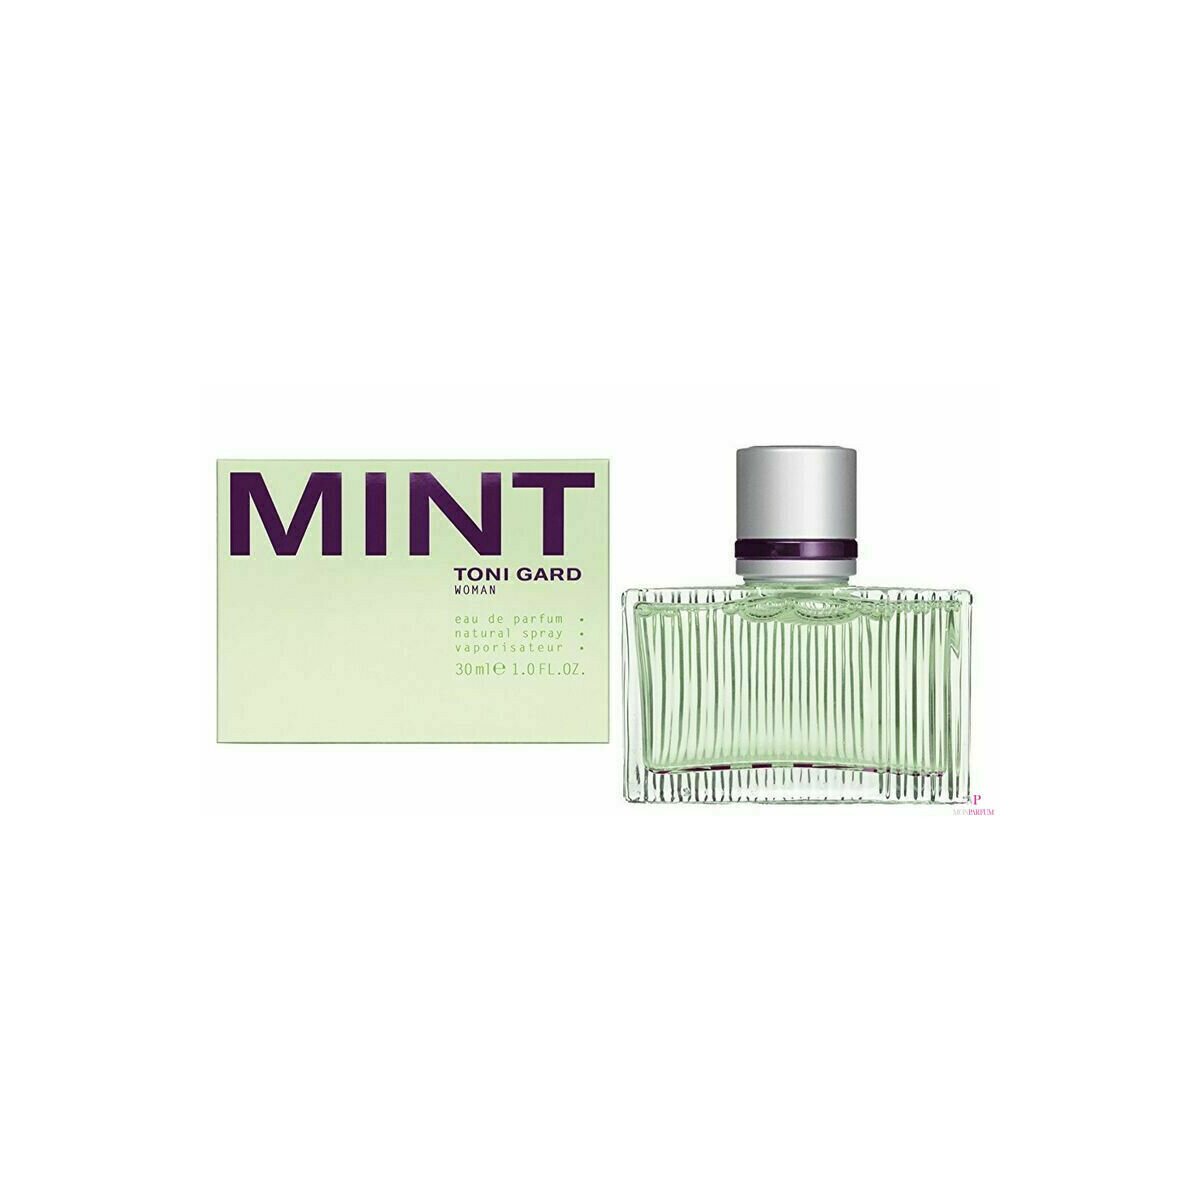 Parfum Woman Gard de € Eau Mint Toni 30ml, 25,00